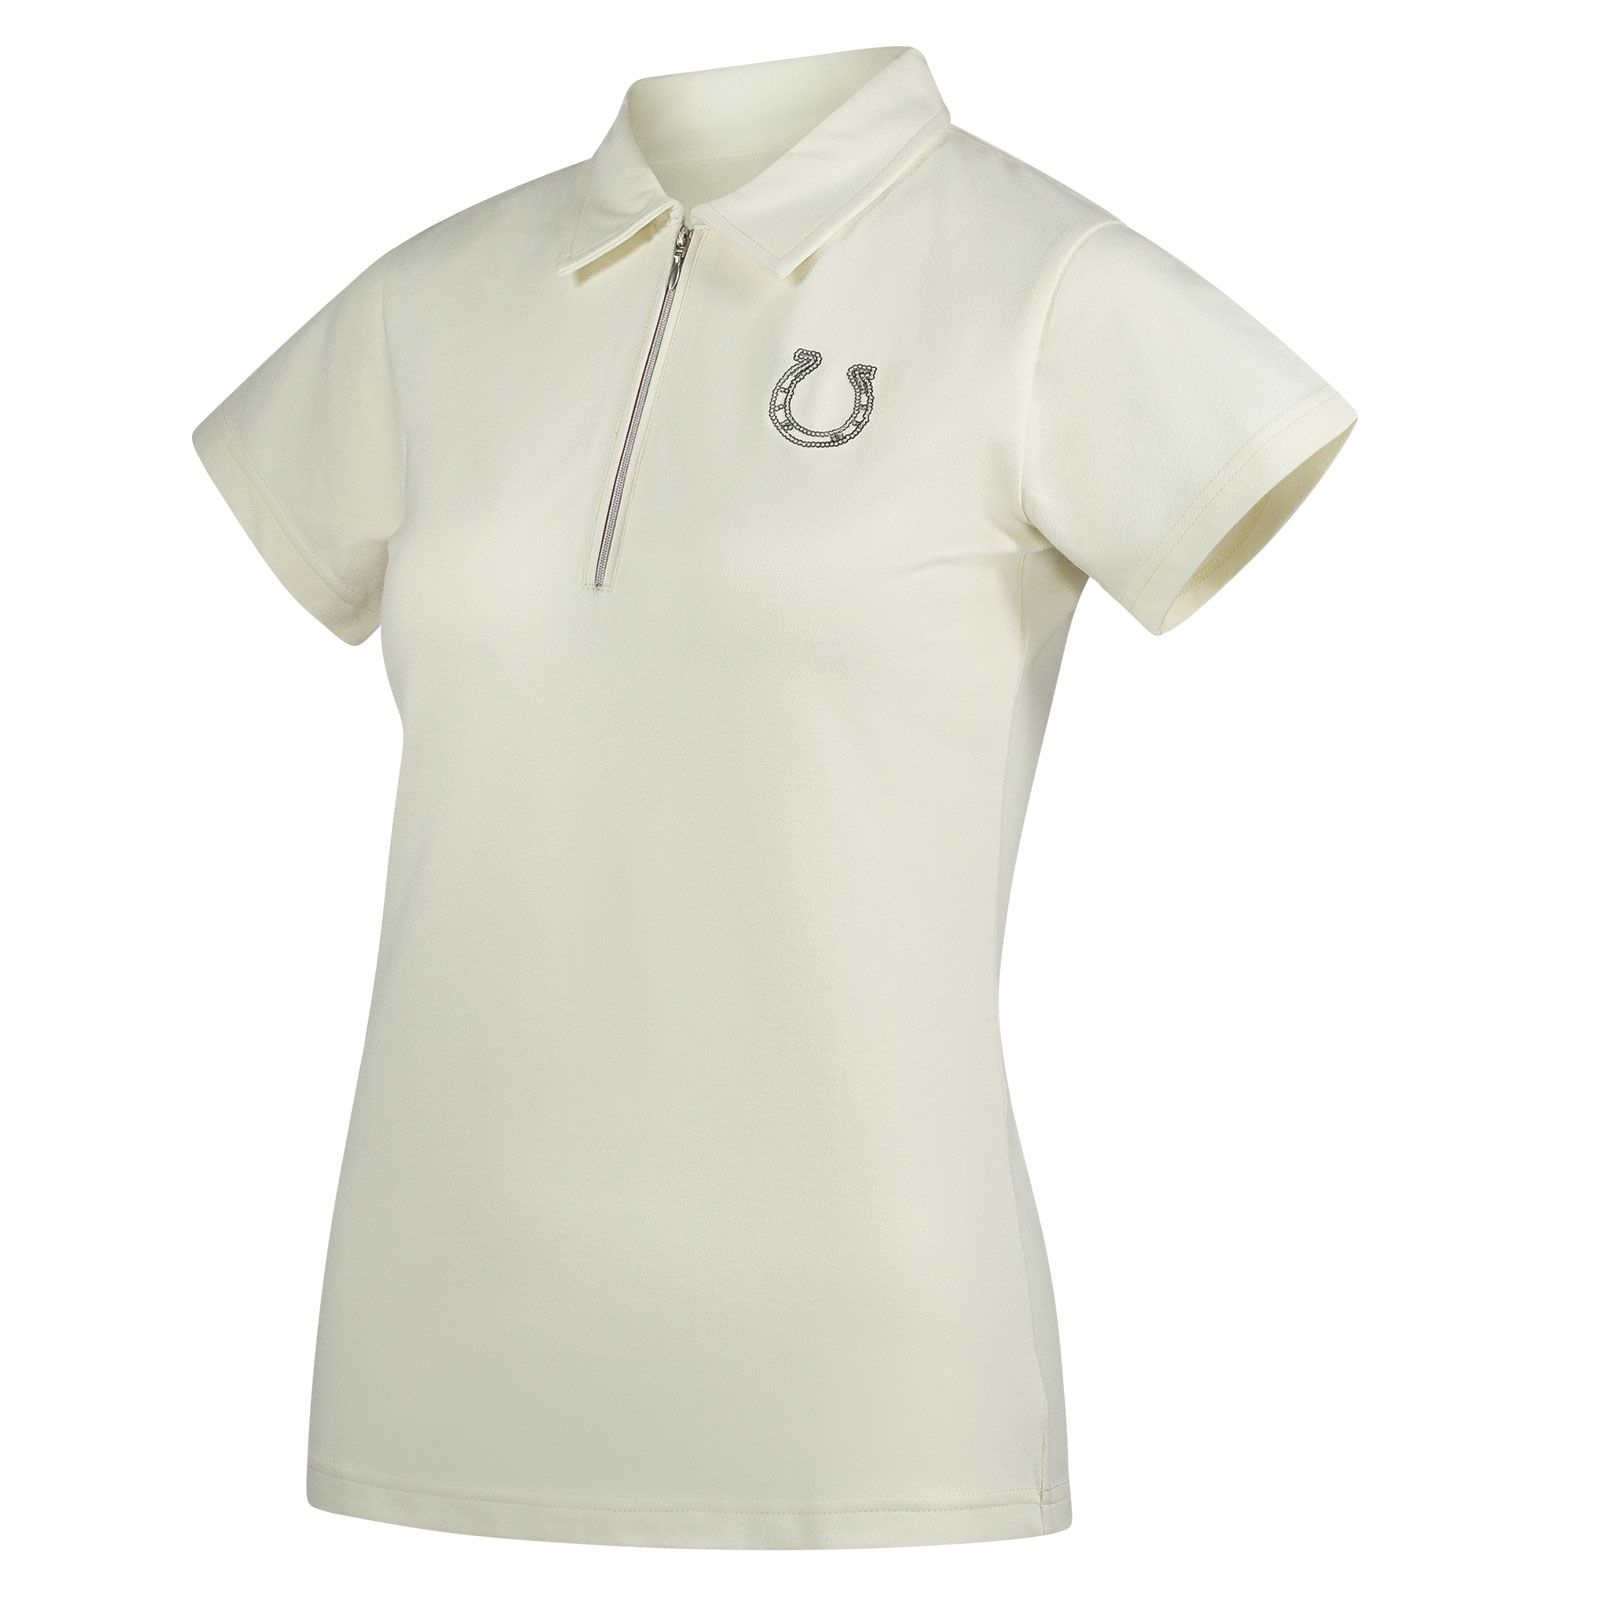 Buy Horze Amy Women's Short Sleeve Cotton Stretch Polo Shirt